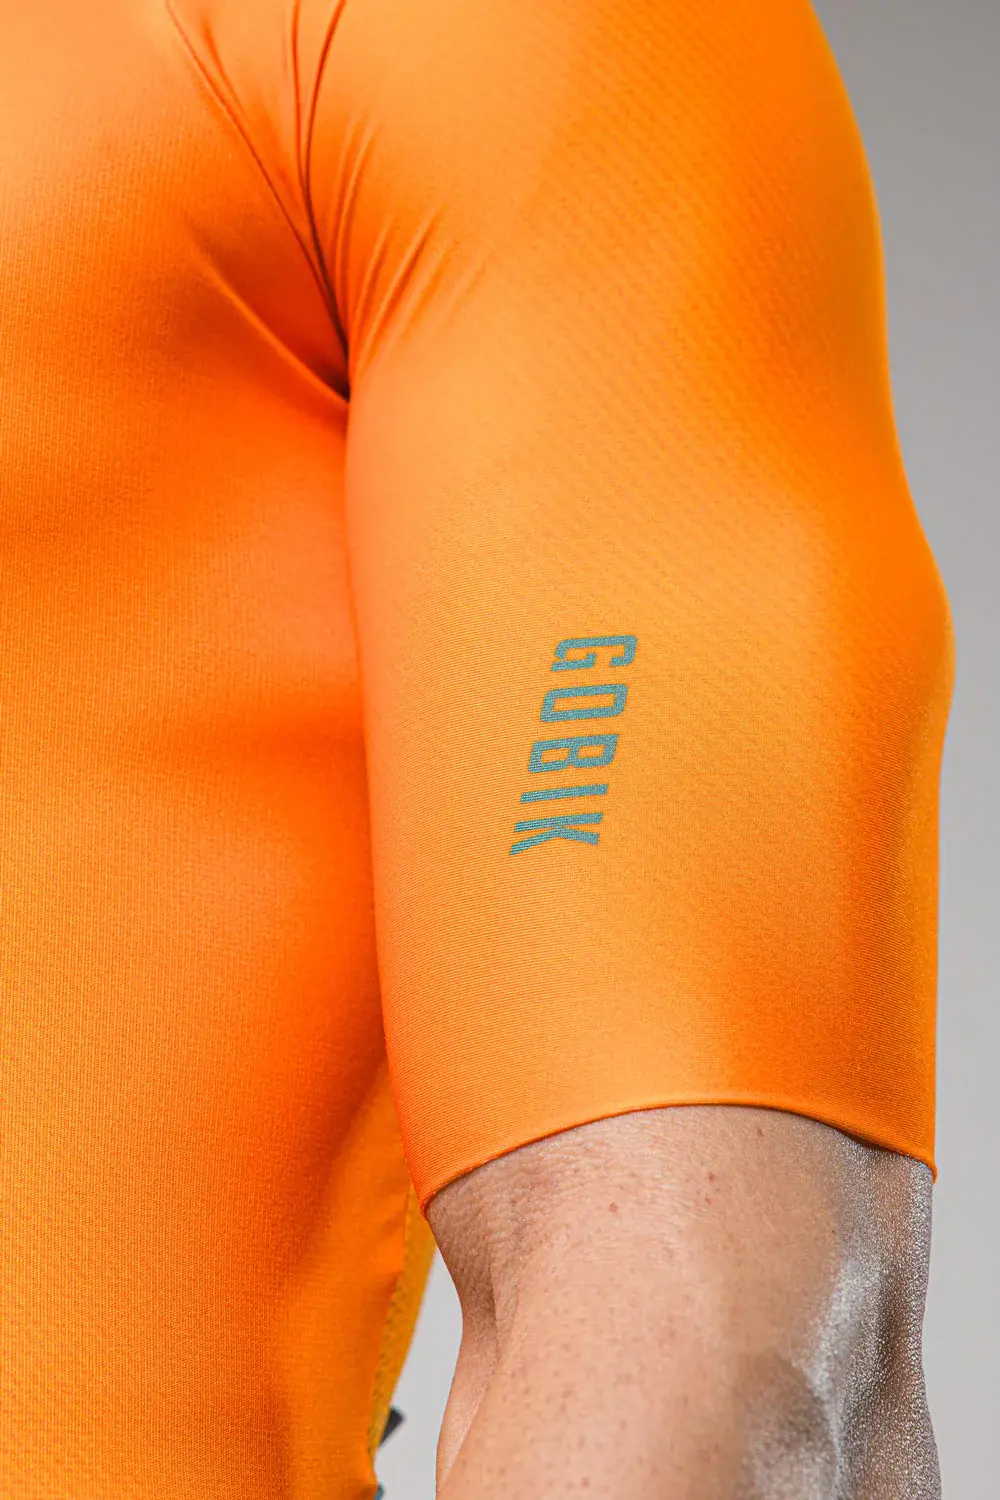 Gobik CX 3.0 Pro Fietsshirt Korte Mouwen Oranje/Groen